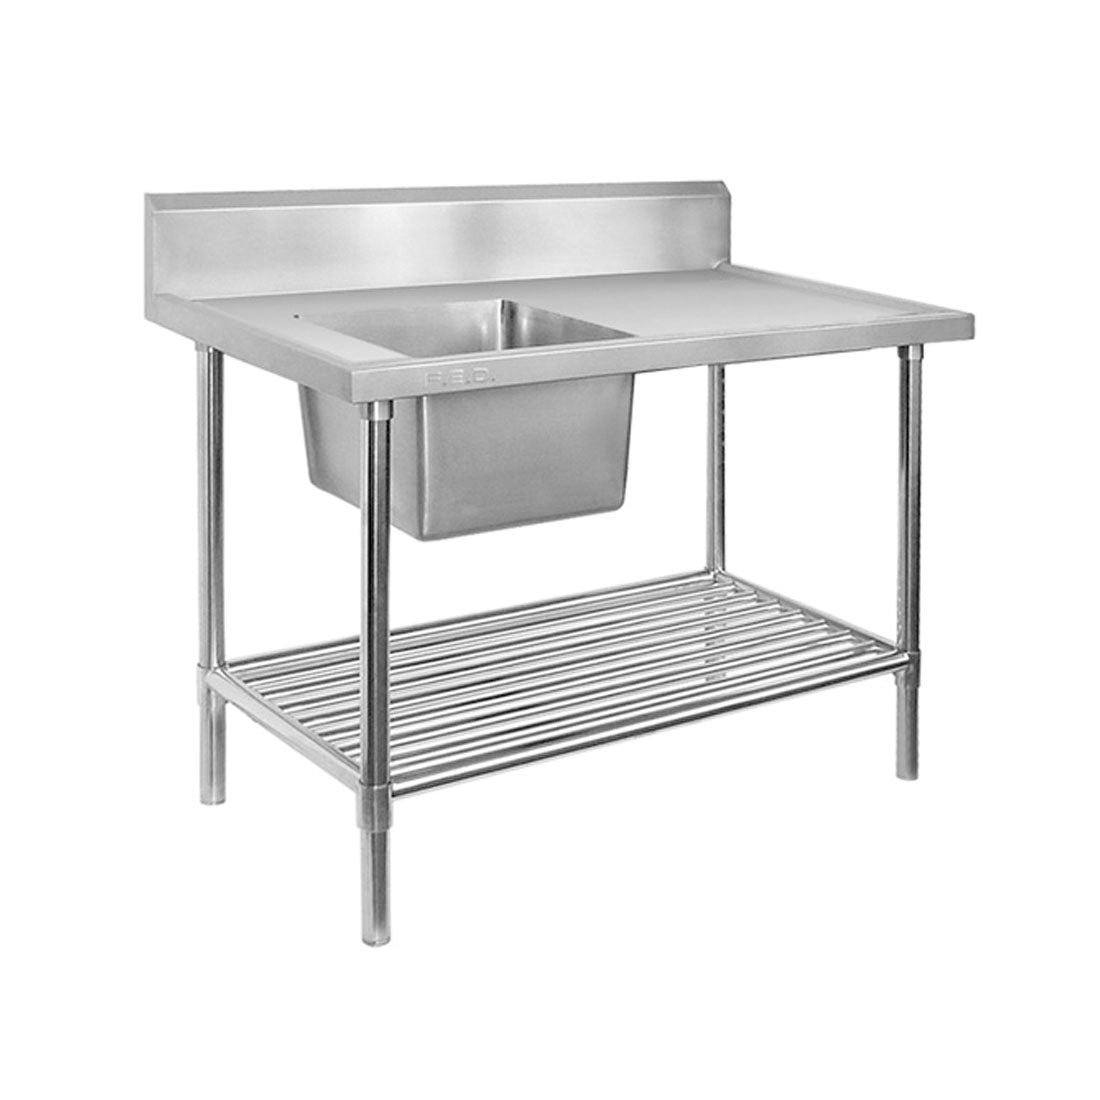 Modular Systems Single Left Sink Bench with Pot Undershelf 1800x600x900 SSB6-1800L/A